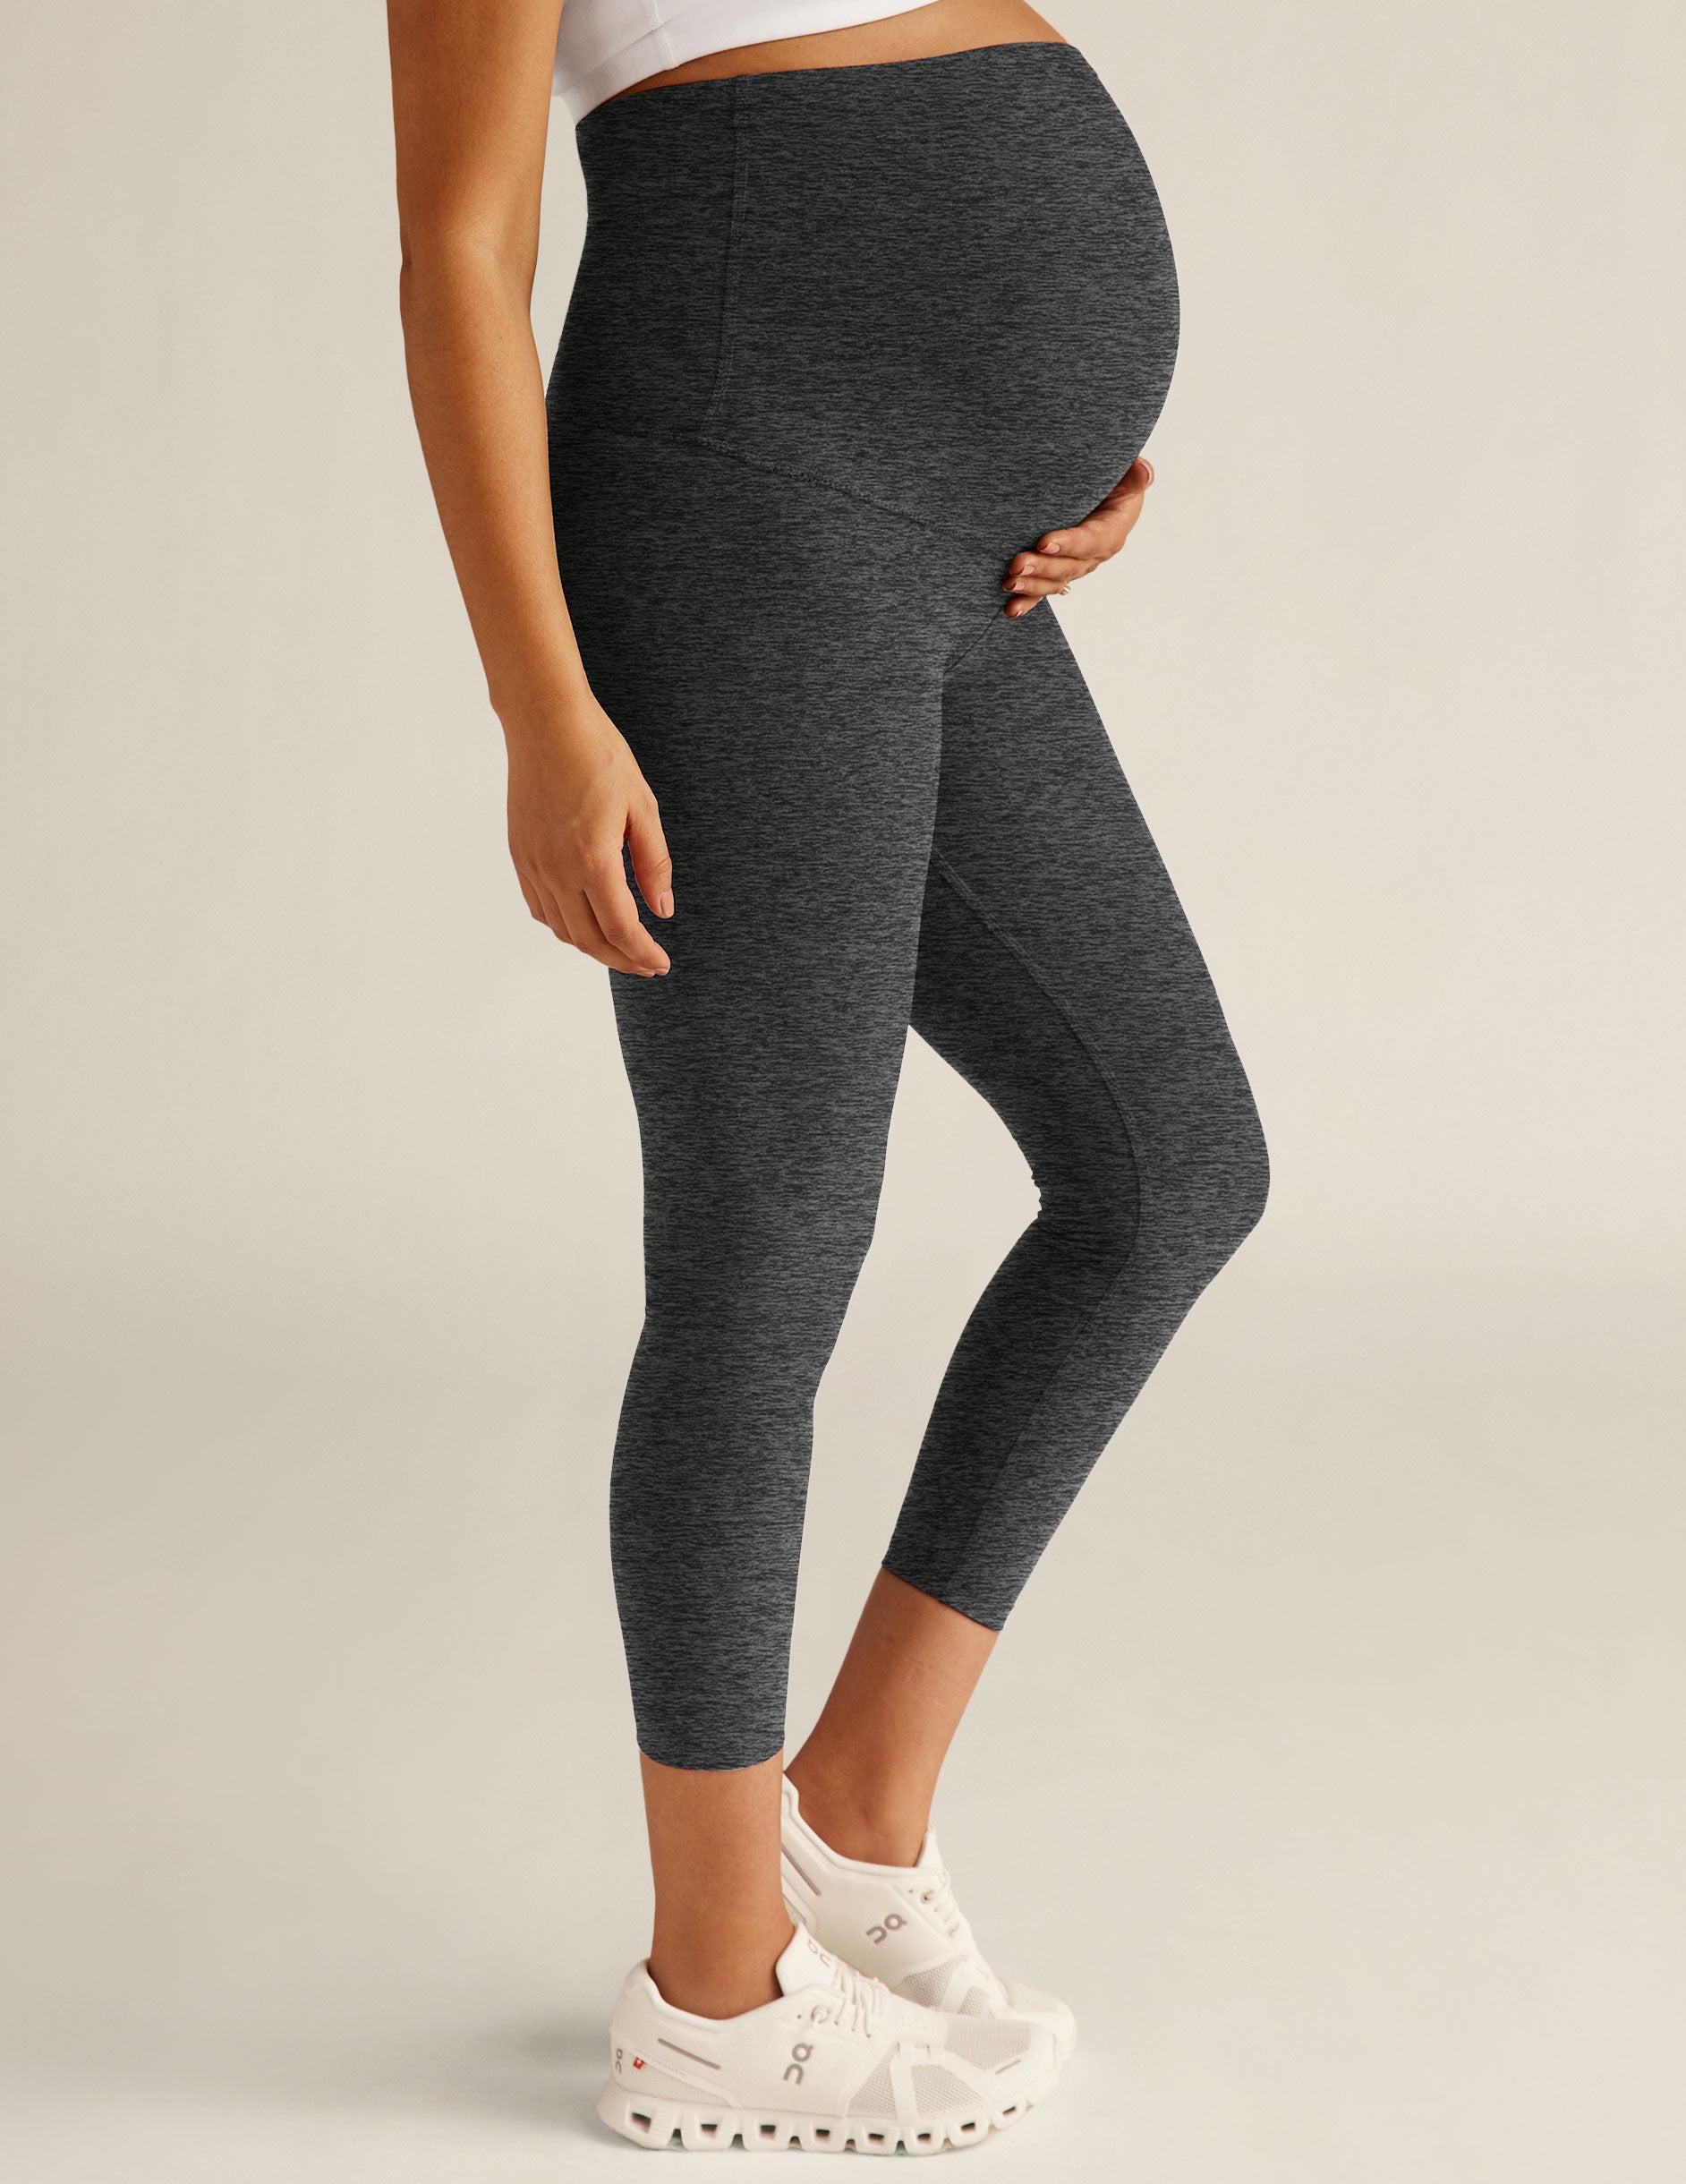 Beyond the Bump by Beyond Yoga Black Leggings Size XS (Maternity) - 59% off